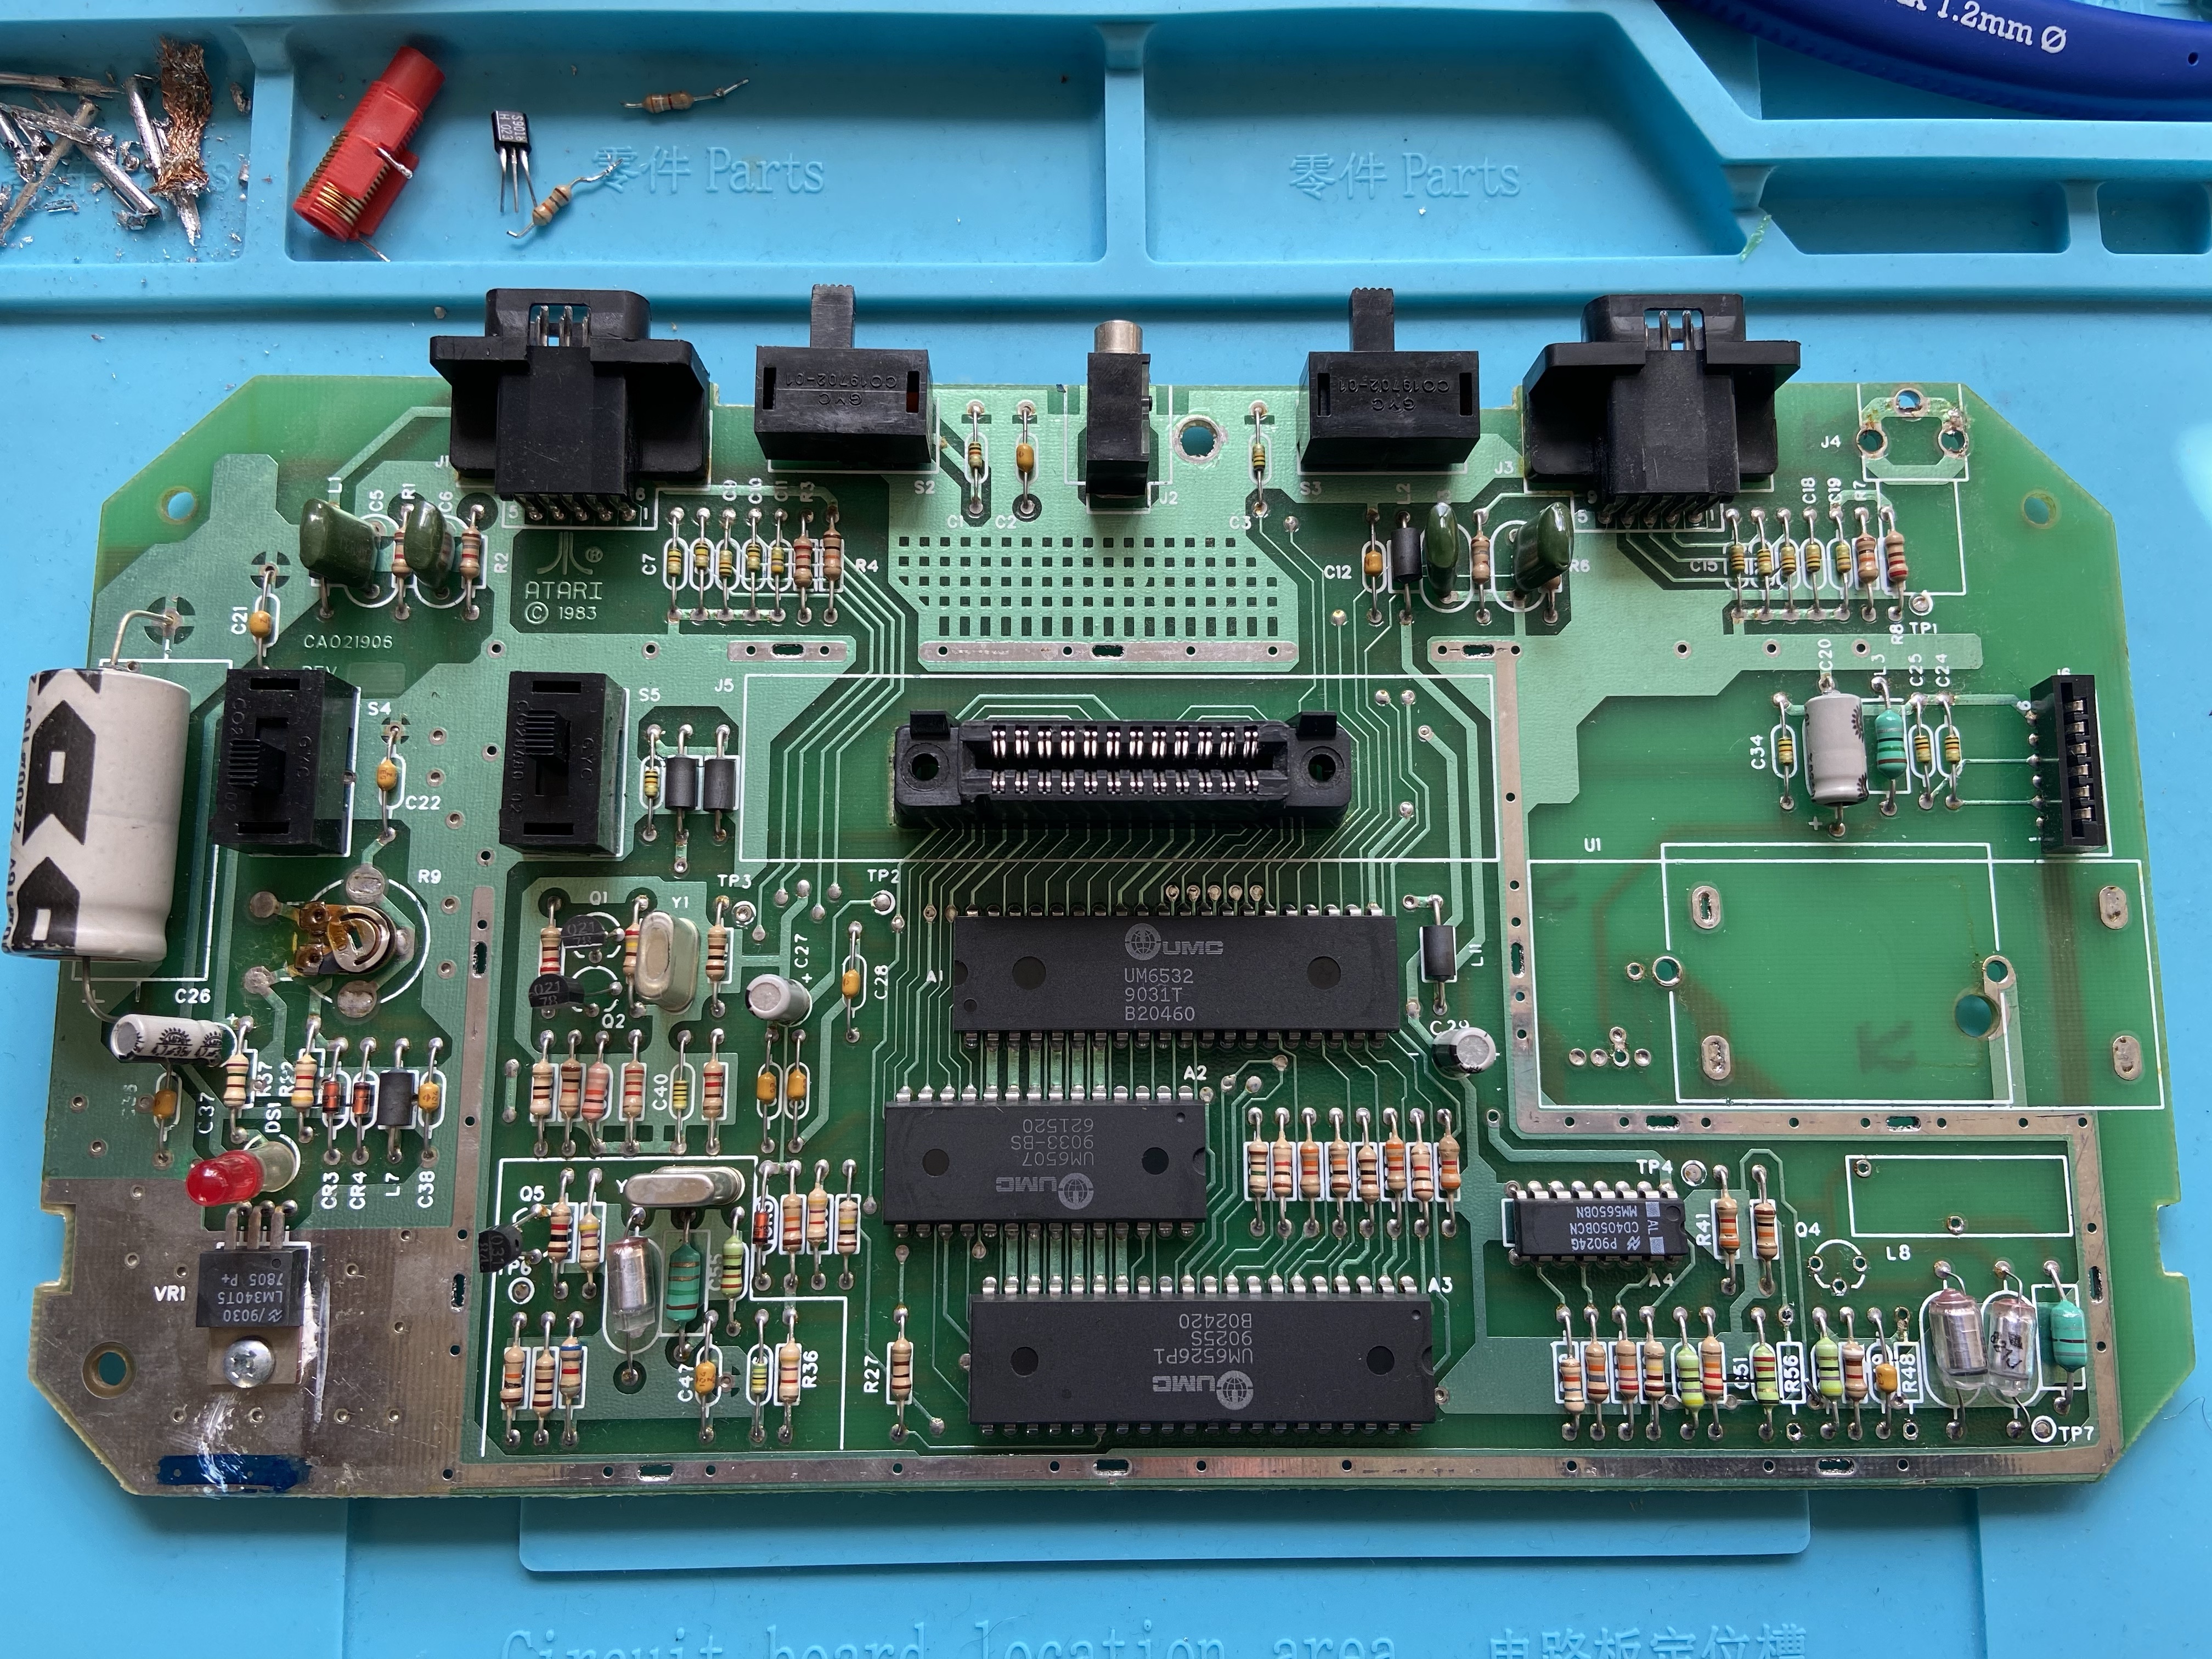 Atari 2600 Jr. main board with RF modulator and connector removed